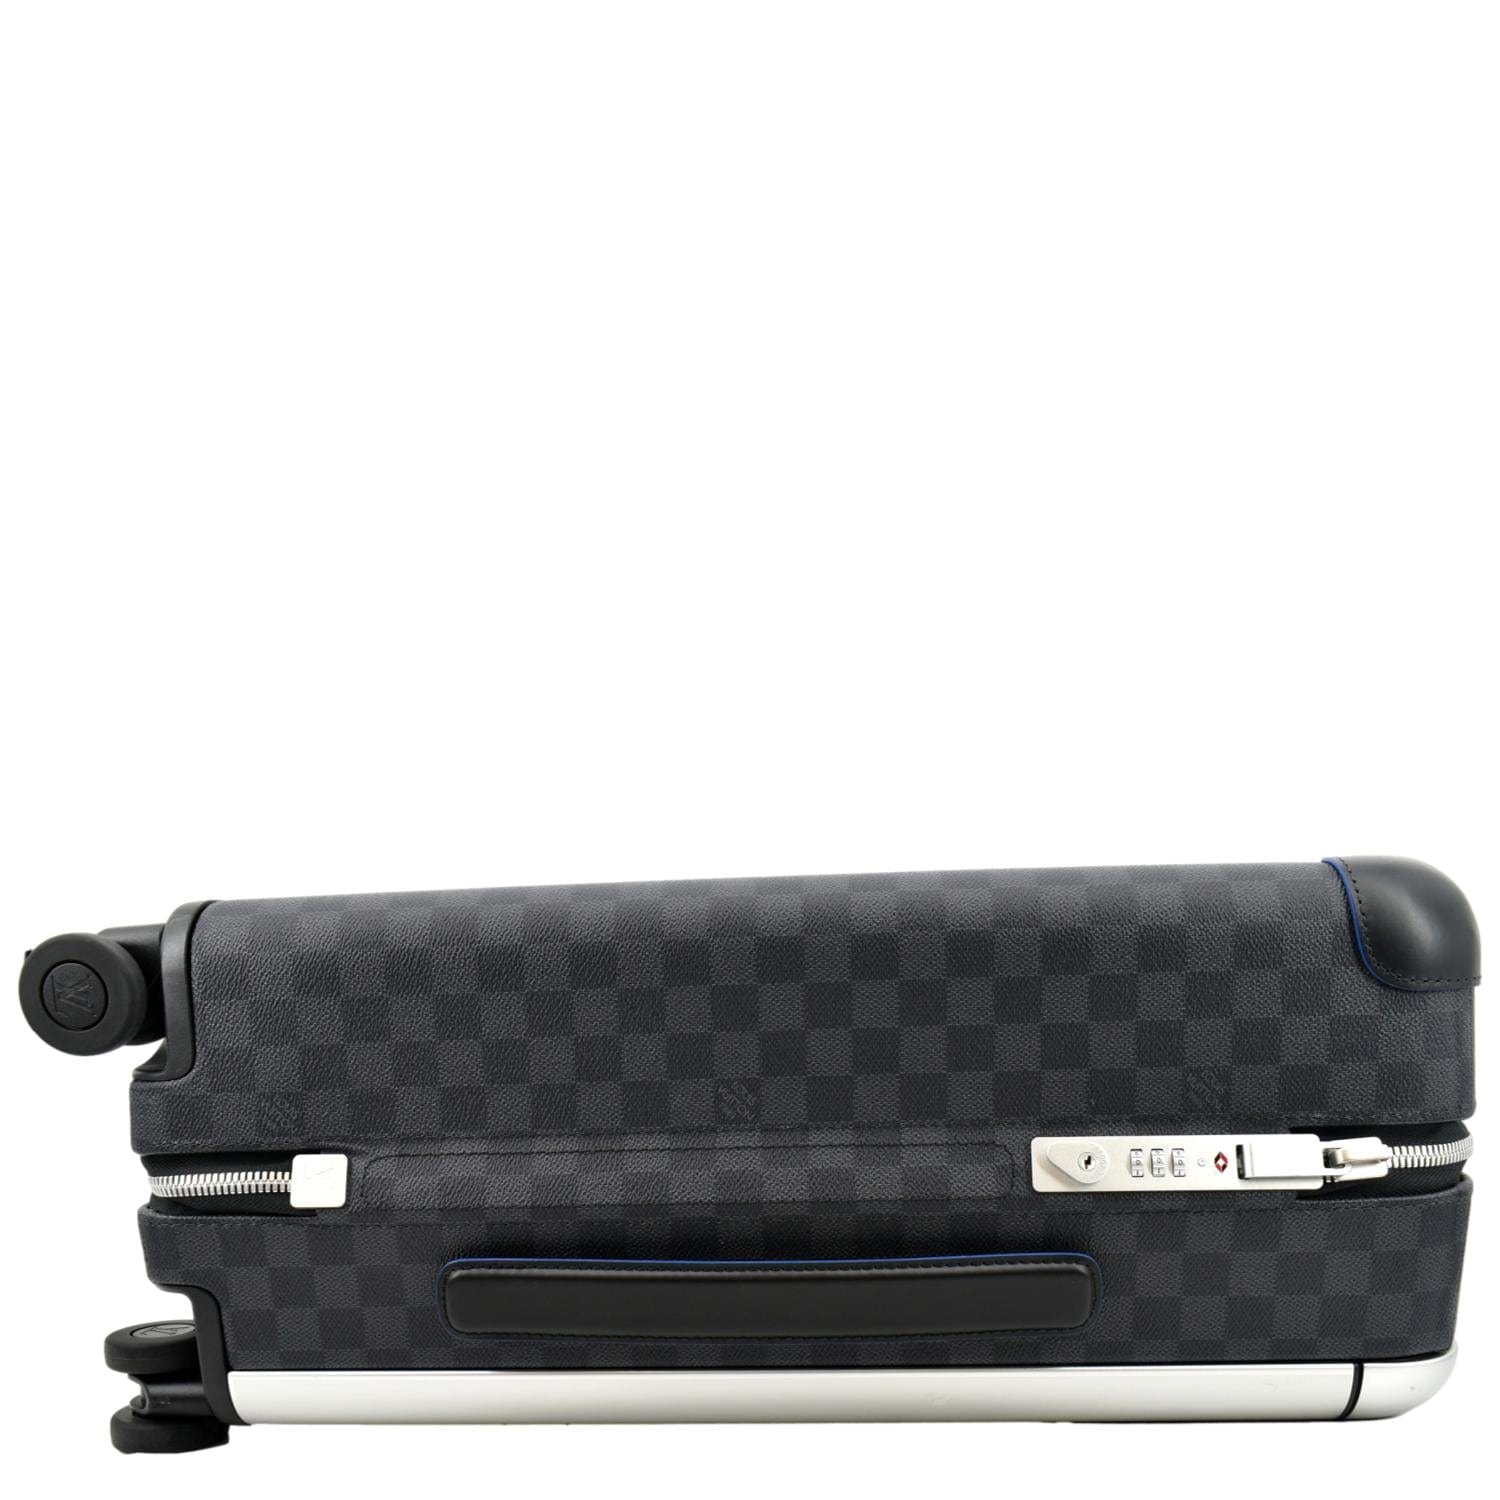 Black Epi leather Louis Vuitton Horizon 55cm rolling luggage at